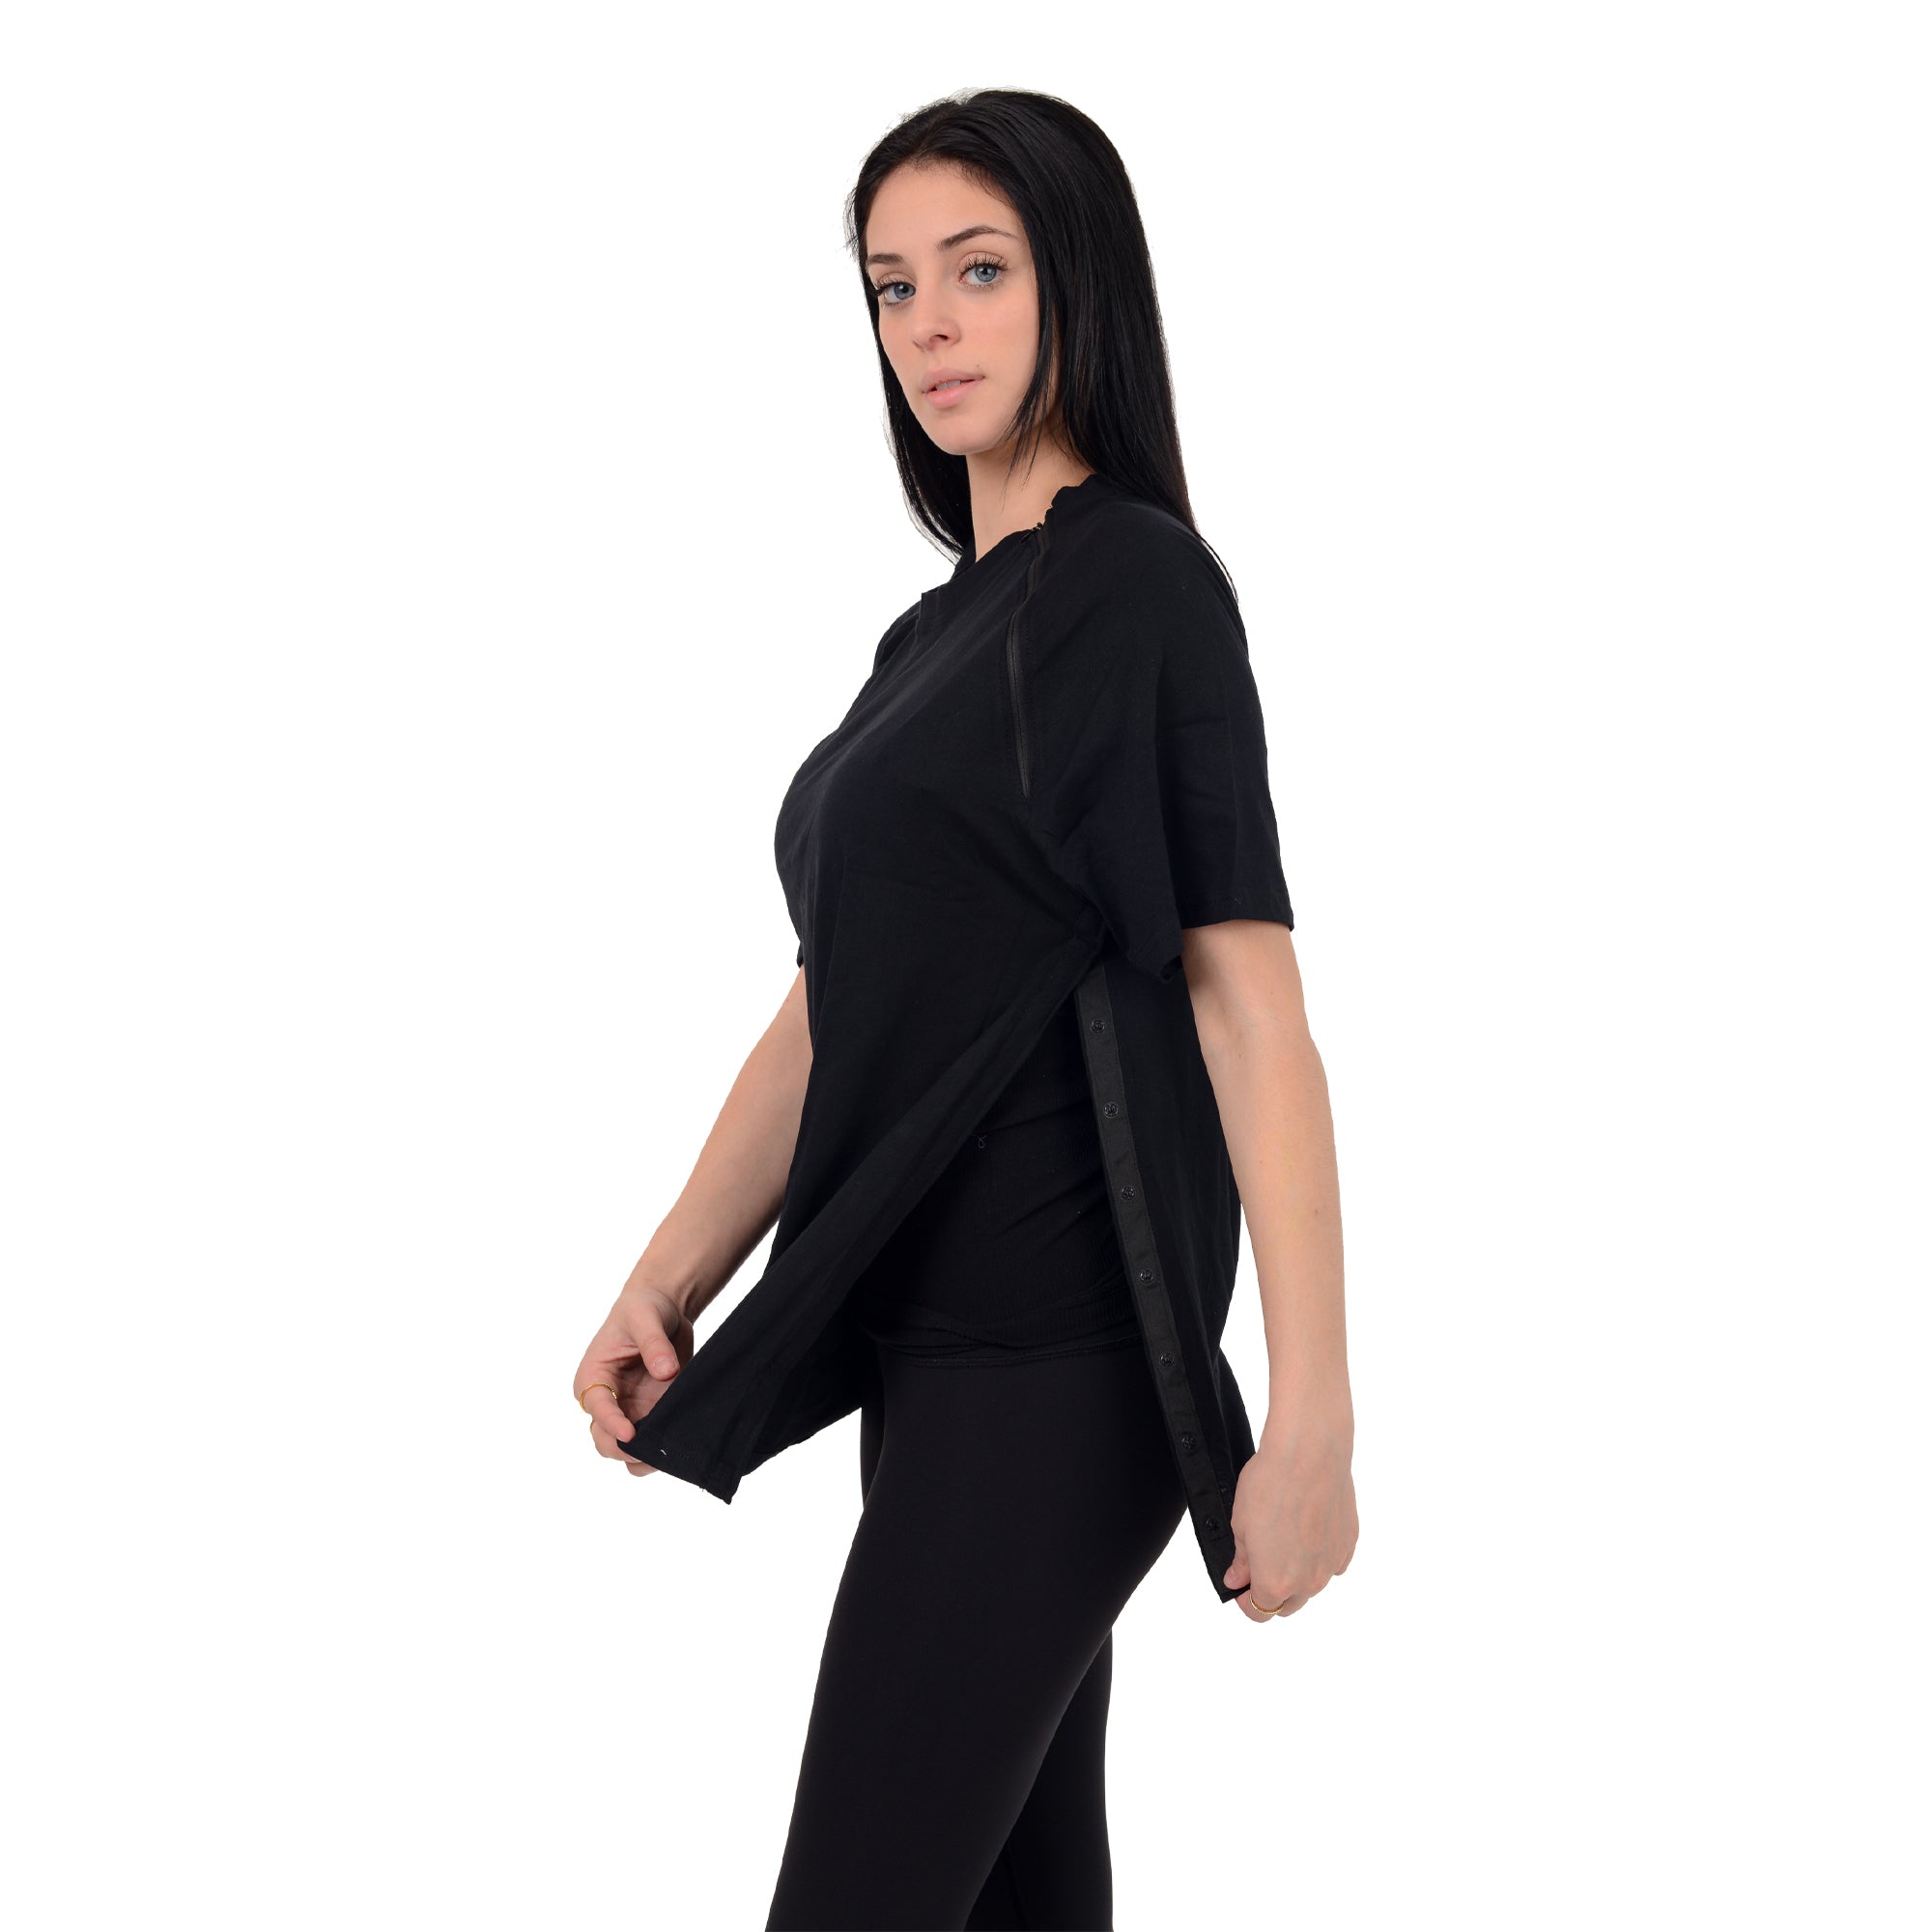 ComfyChemo® Port Access Shirts - Women